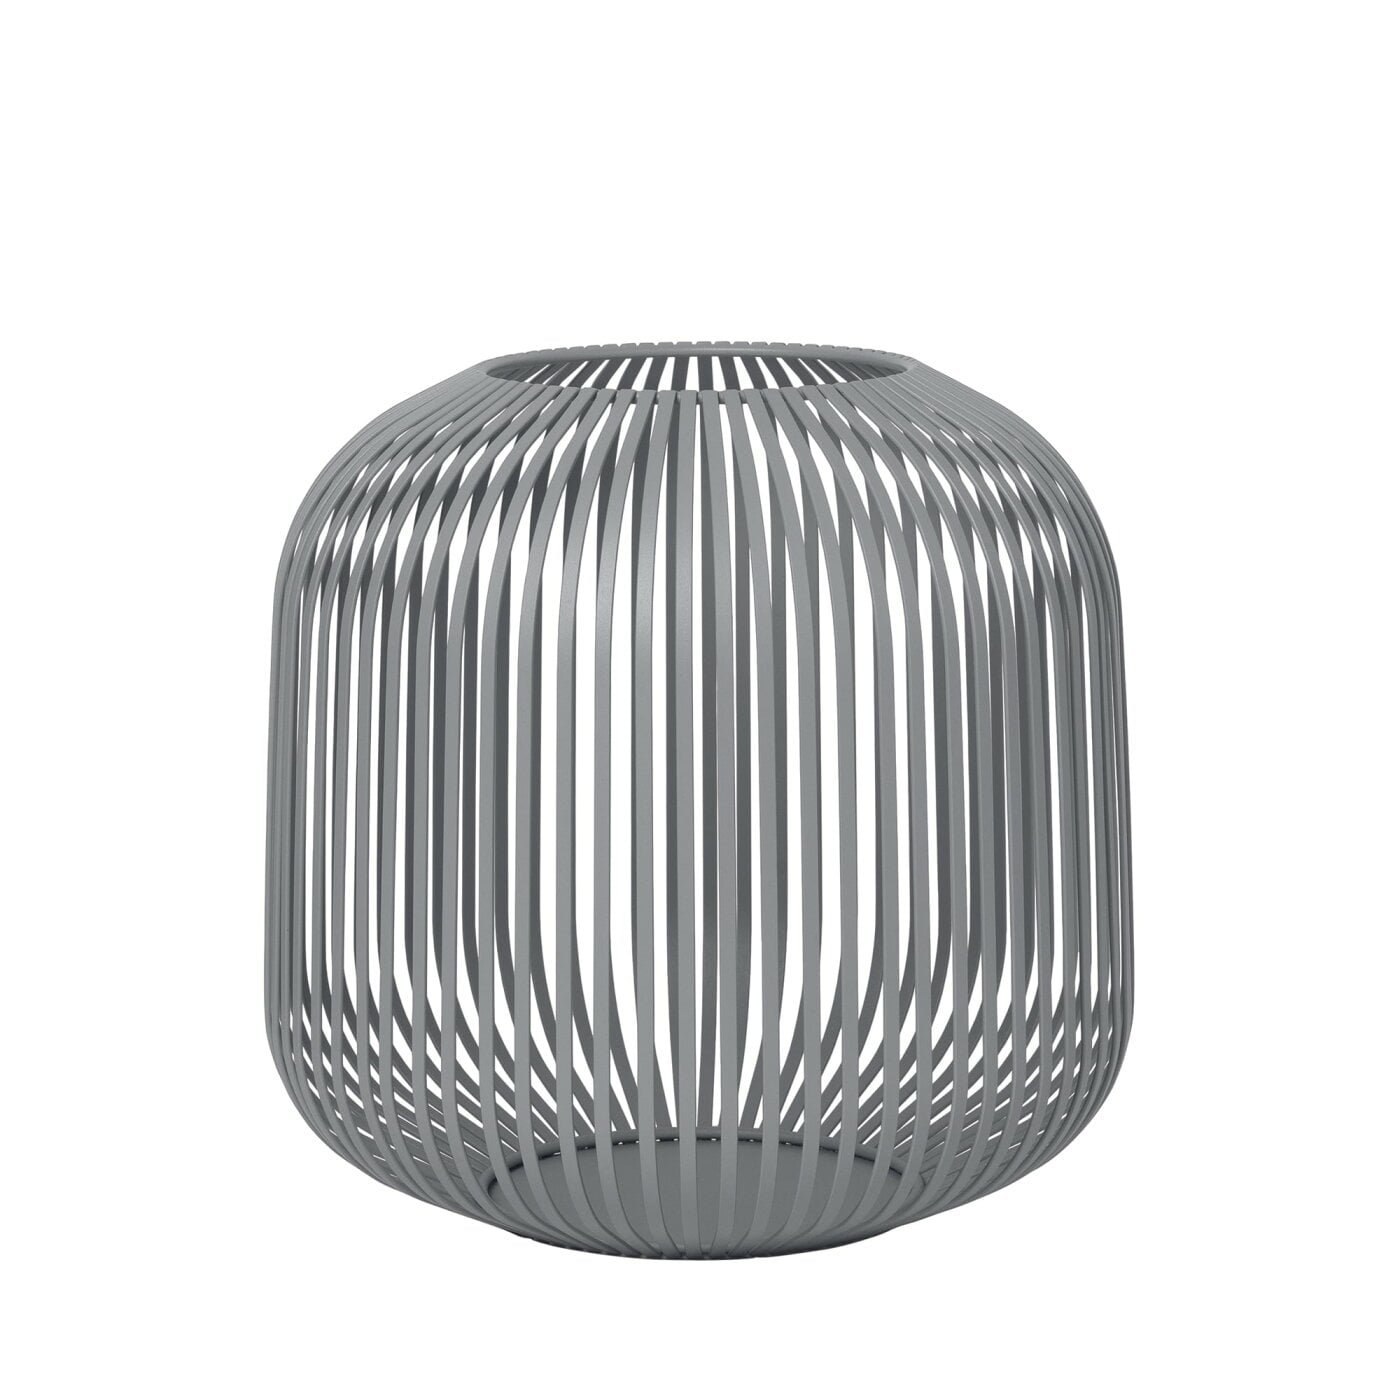 Blomus Lantern - Powder Coated Steel in Steel-Grey: Medium 28x27cm LITO